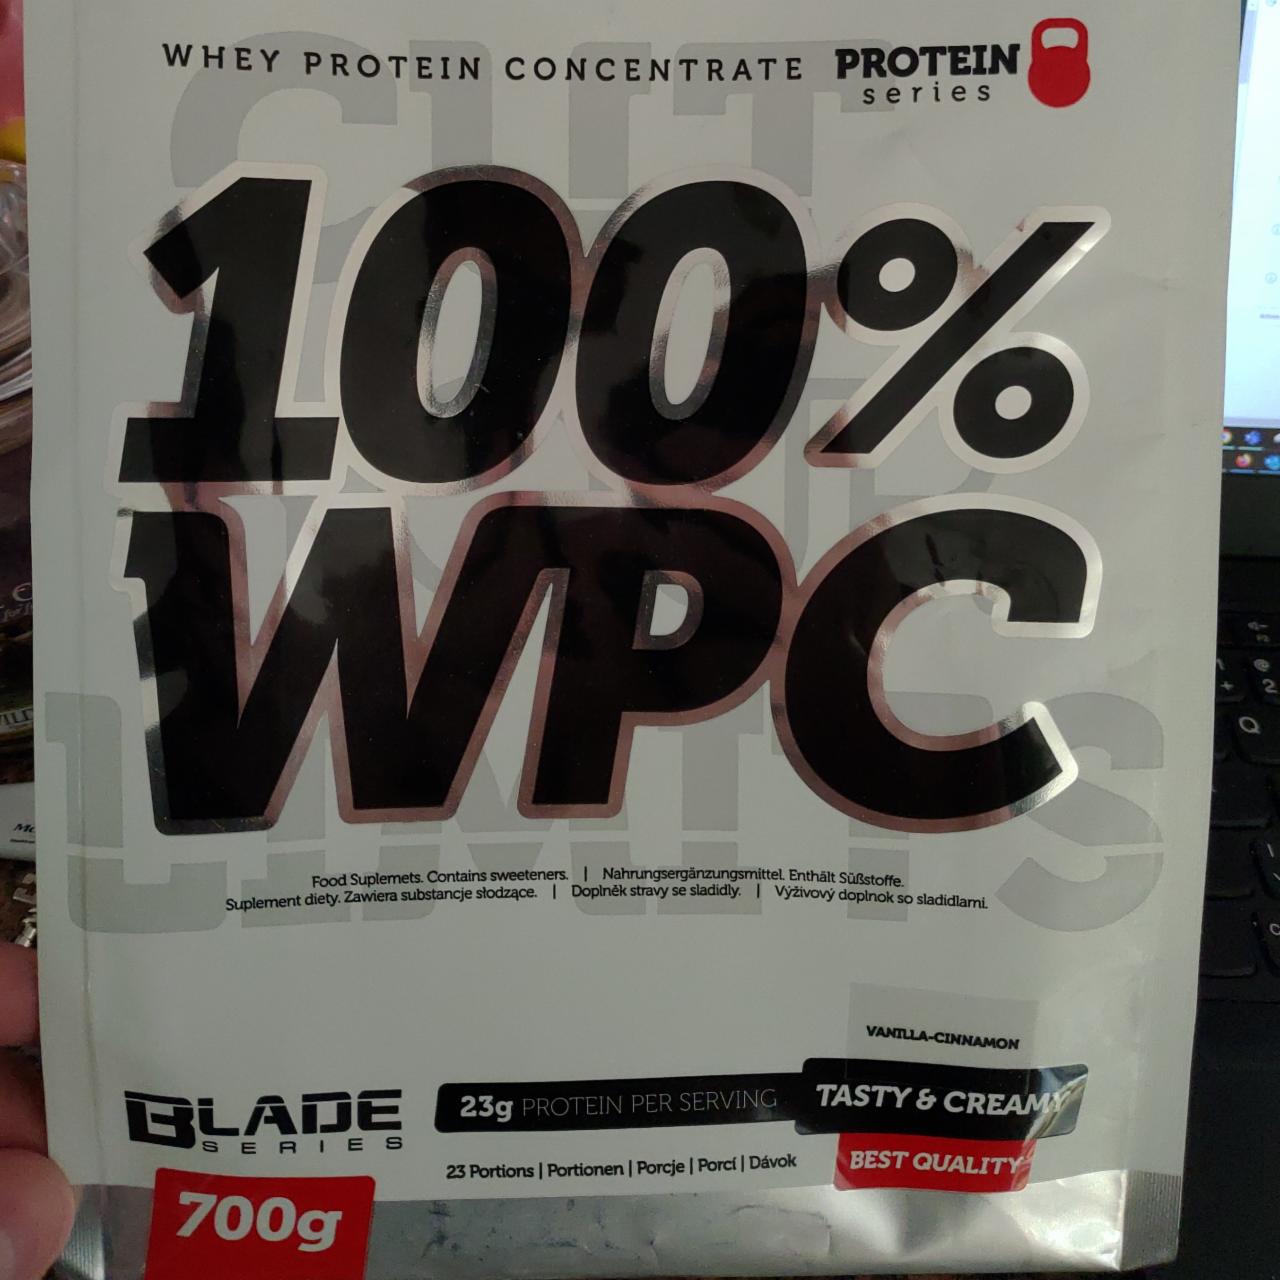 Fotografie - 100% WPC Whey protein concentrate Vanilla-Cinnamon Blade Series